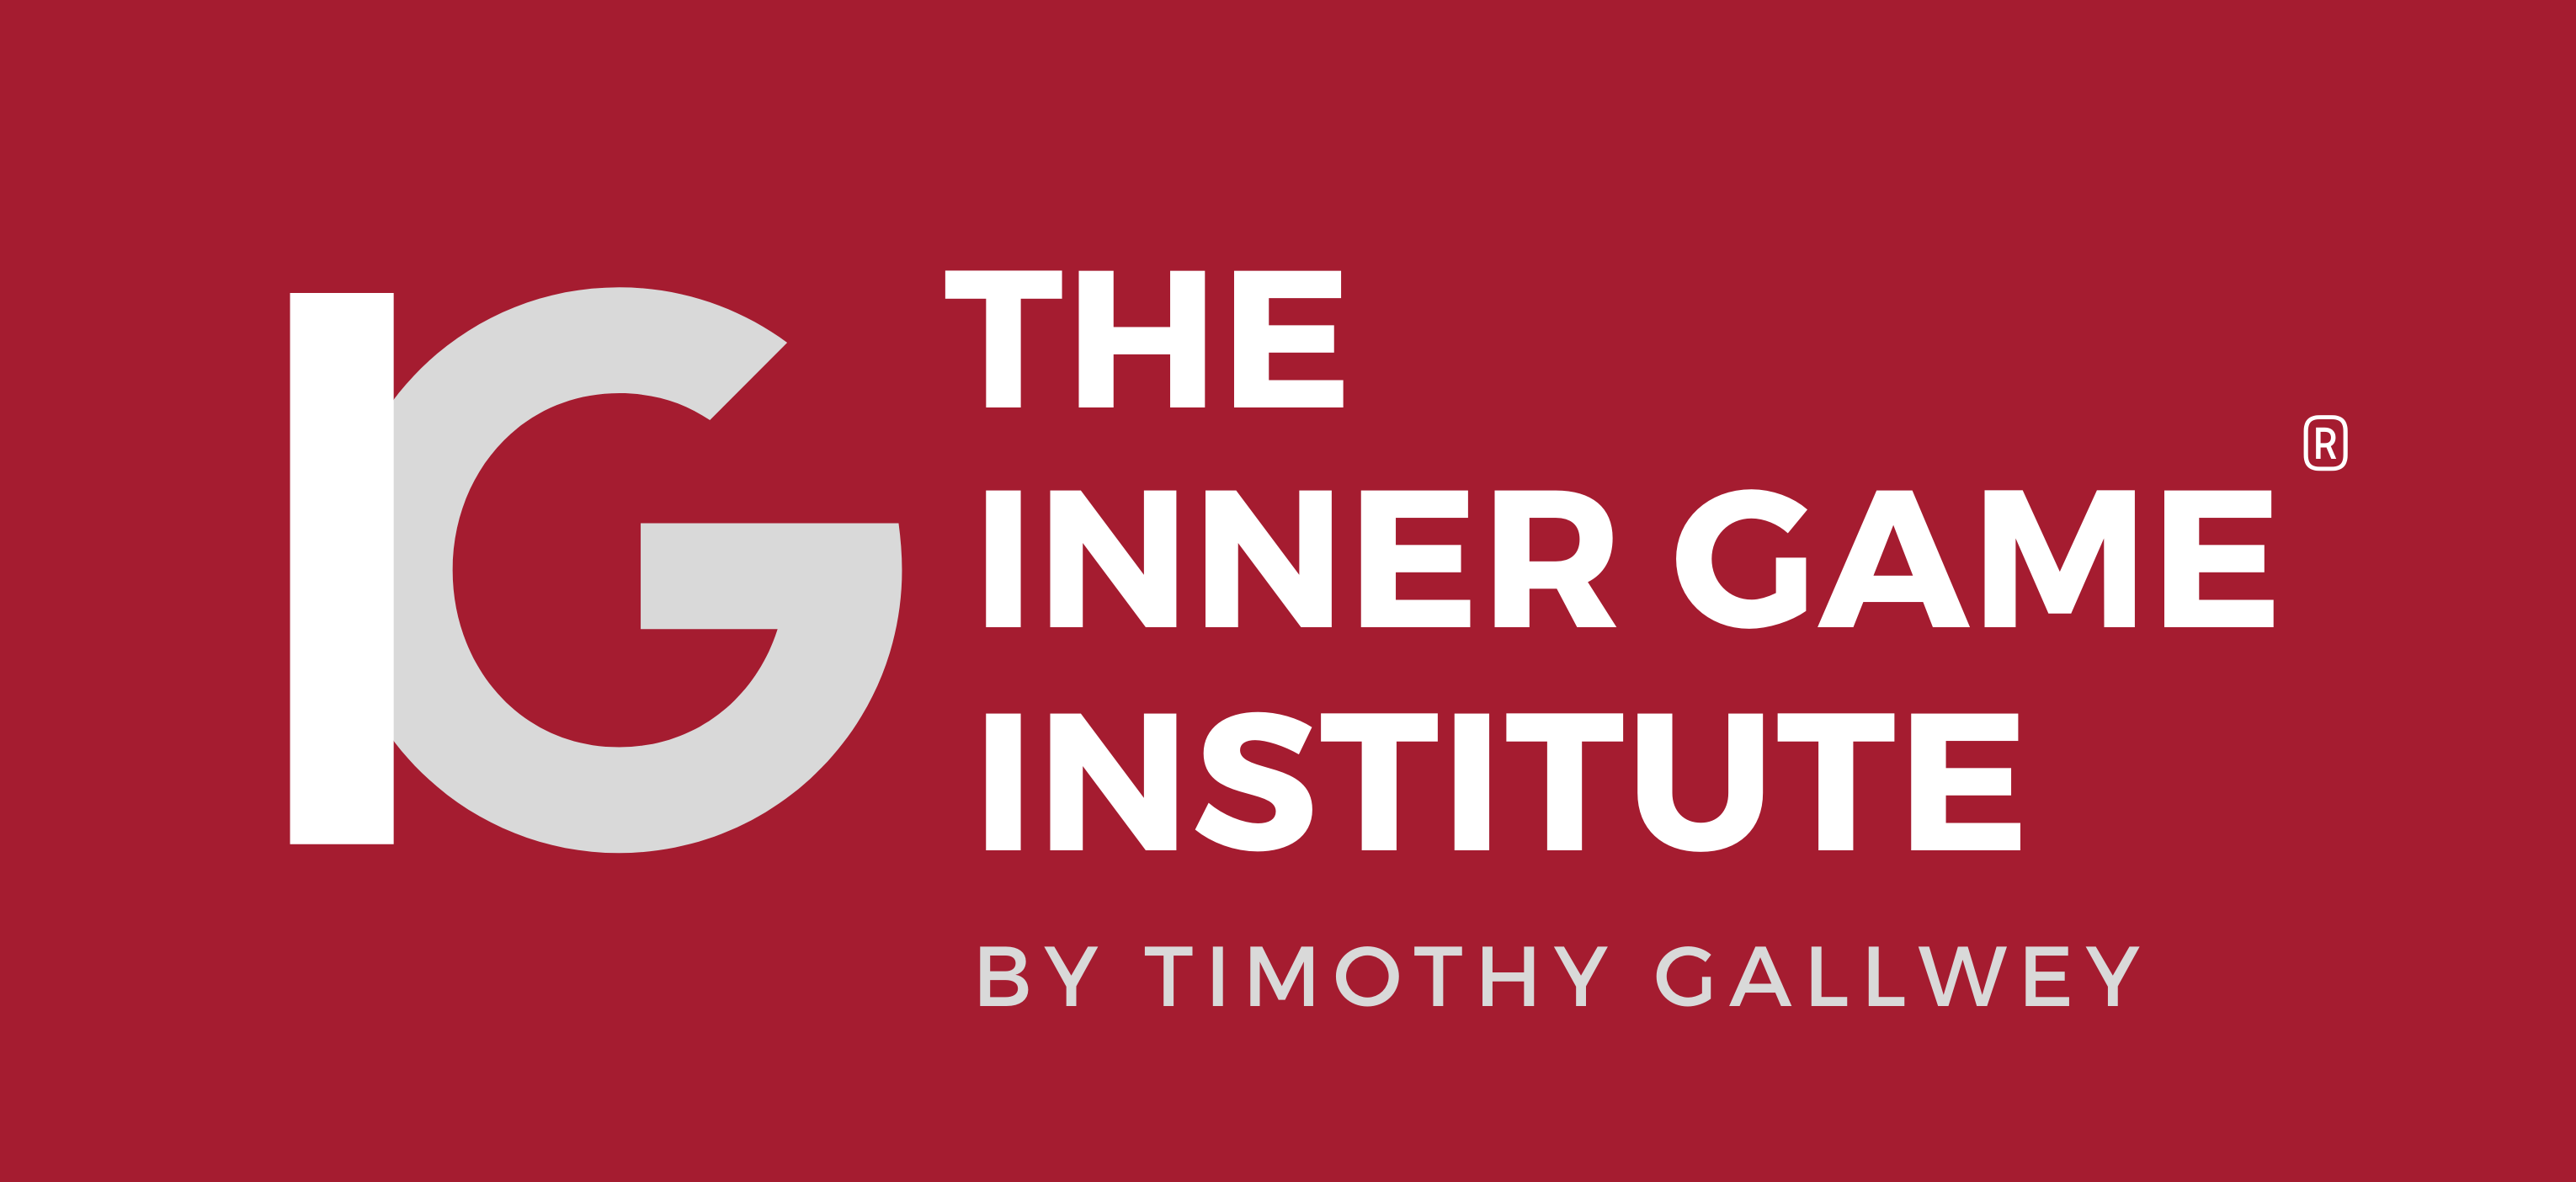 The Inner Game Institute